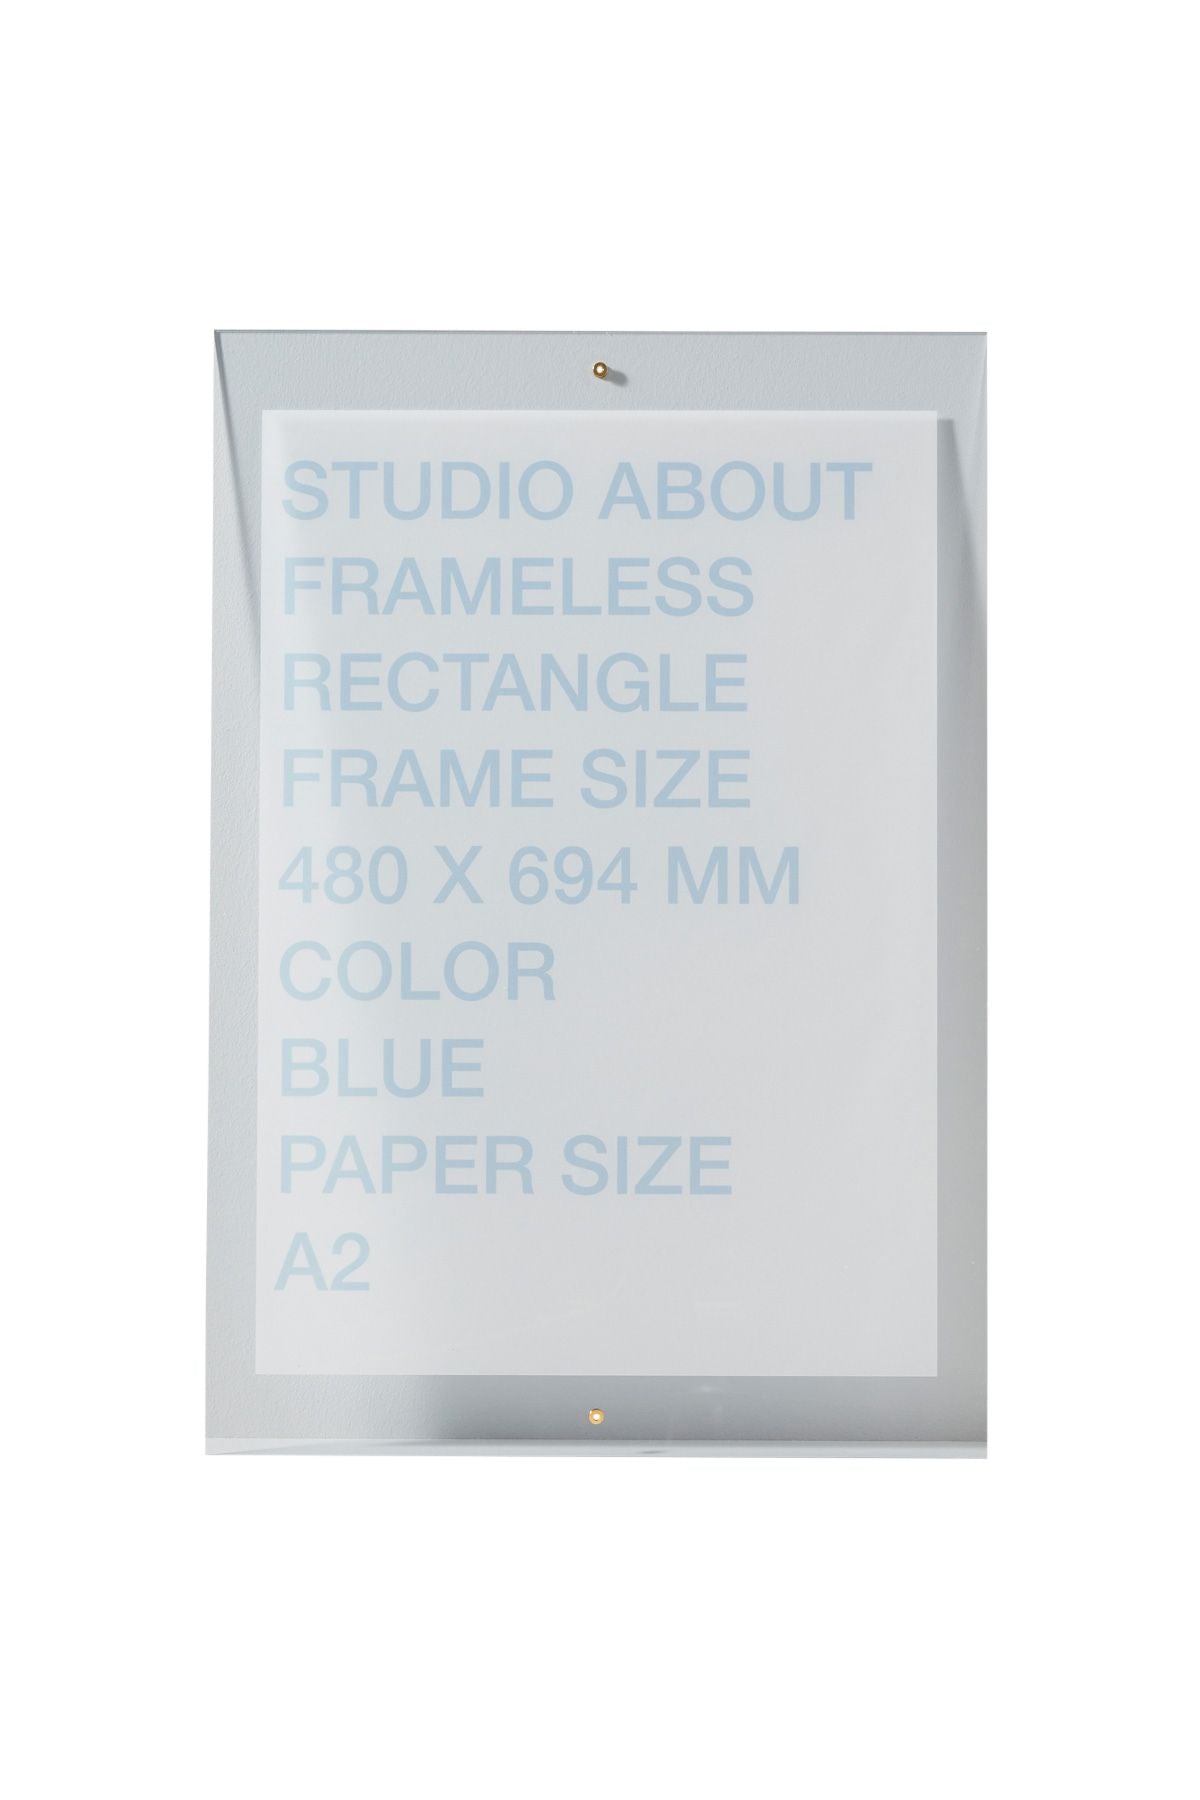 Studio About Frameless Frame A2 Rectangle, Blue